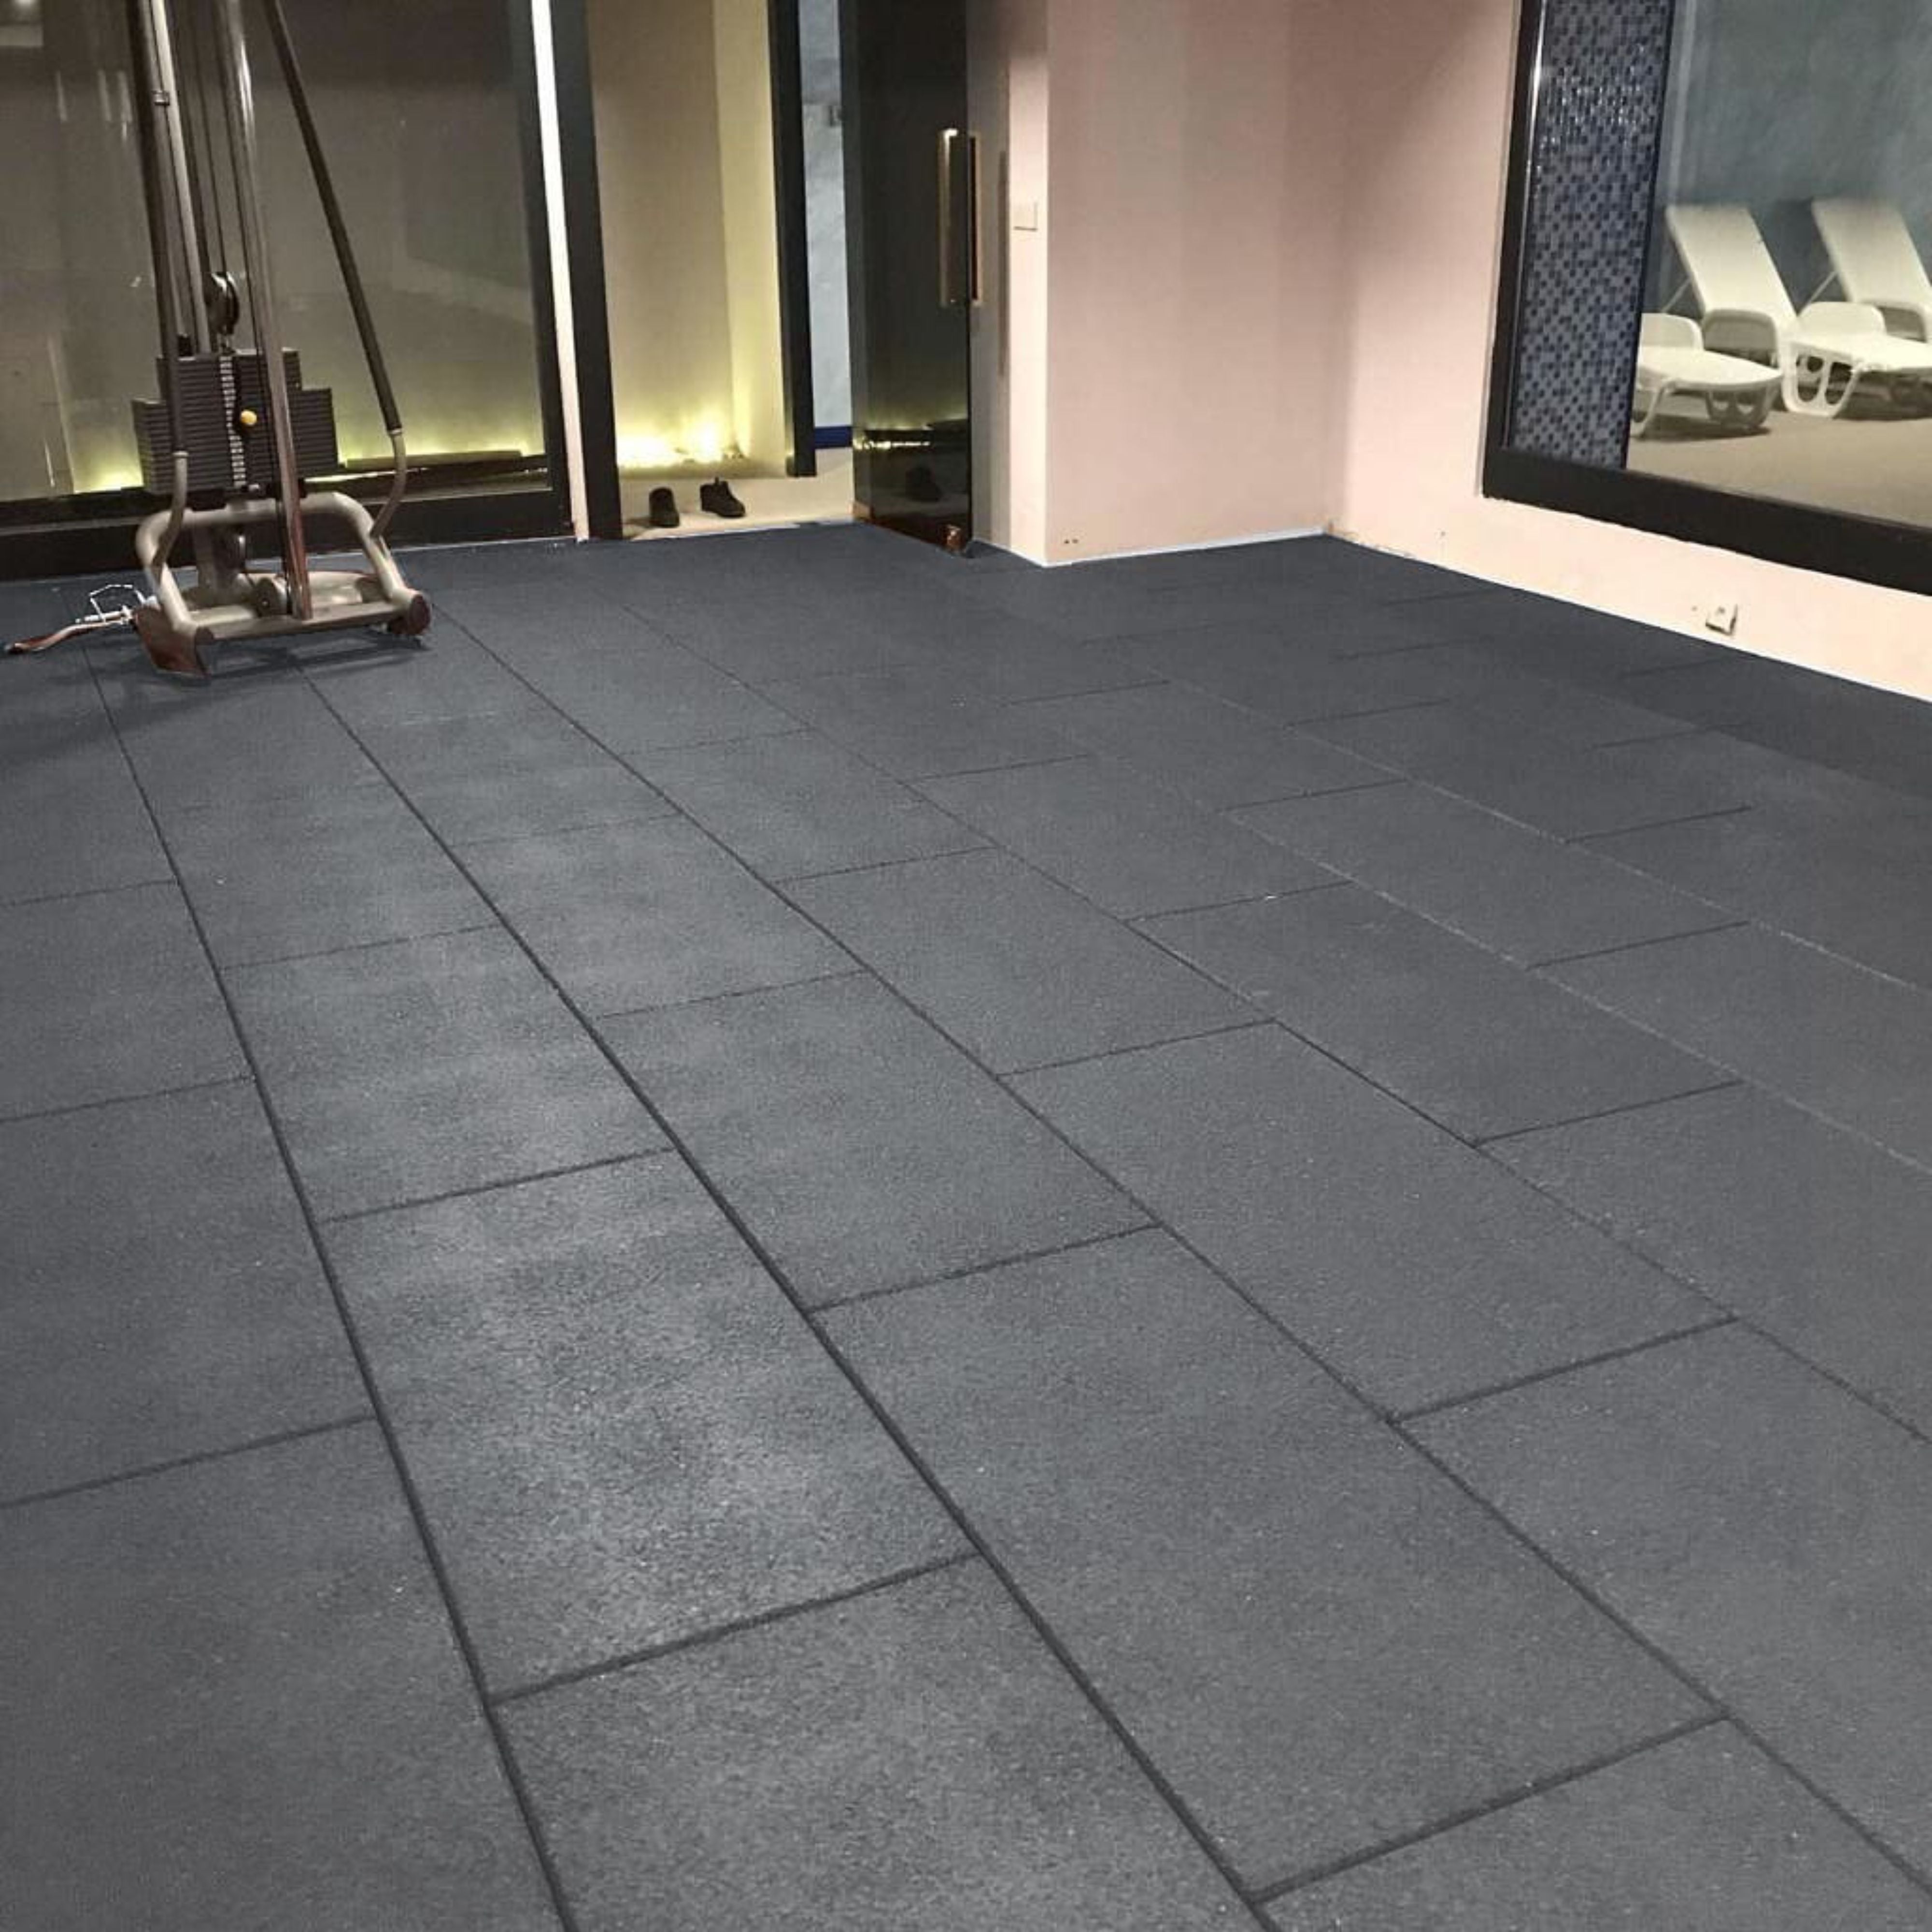 36m2 double garage package, BeFit Flatline Grey Rubber Gym Flooring - Cannons UK